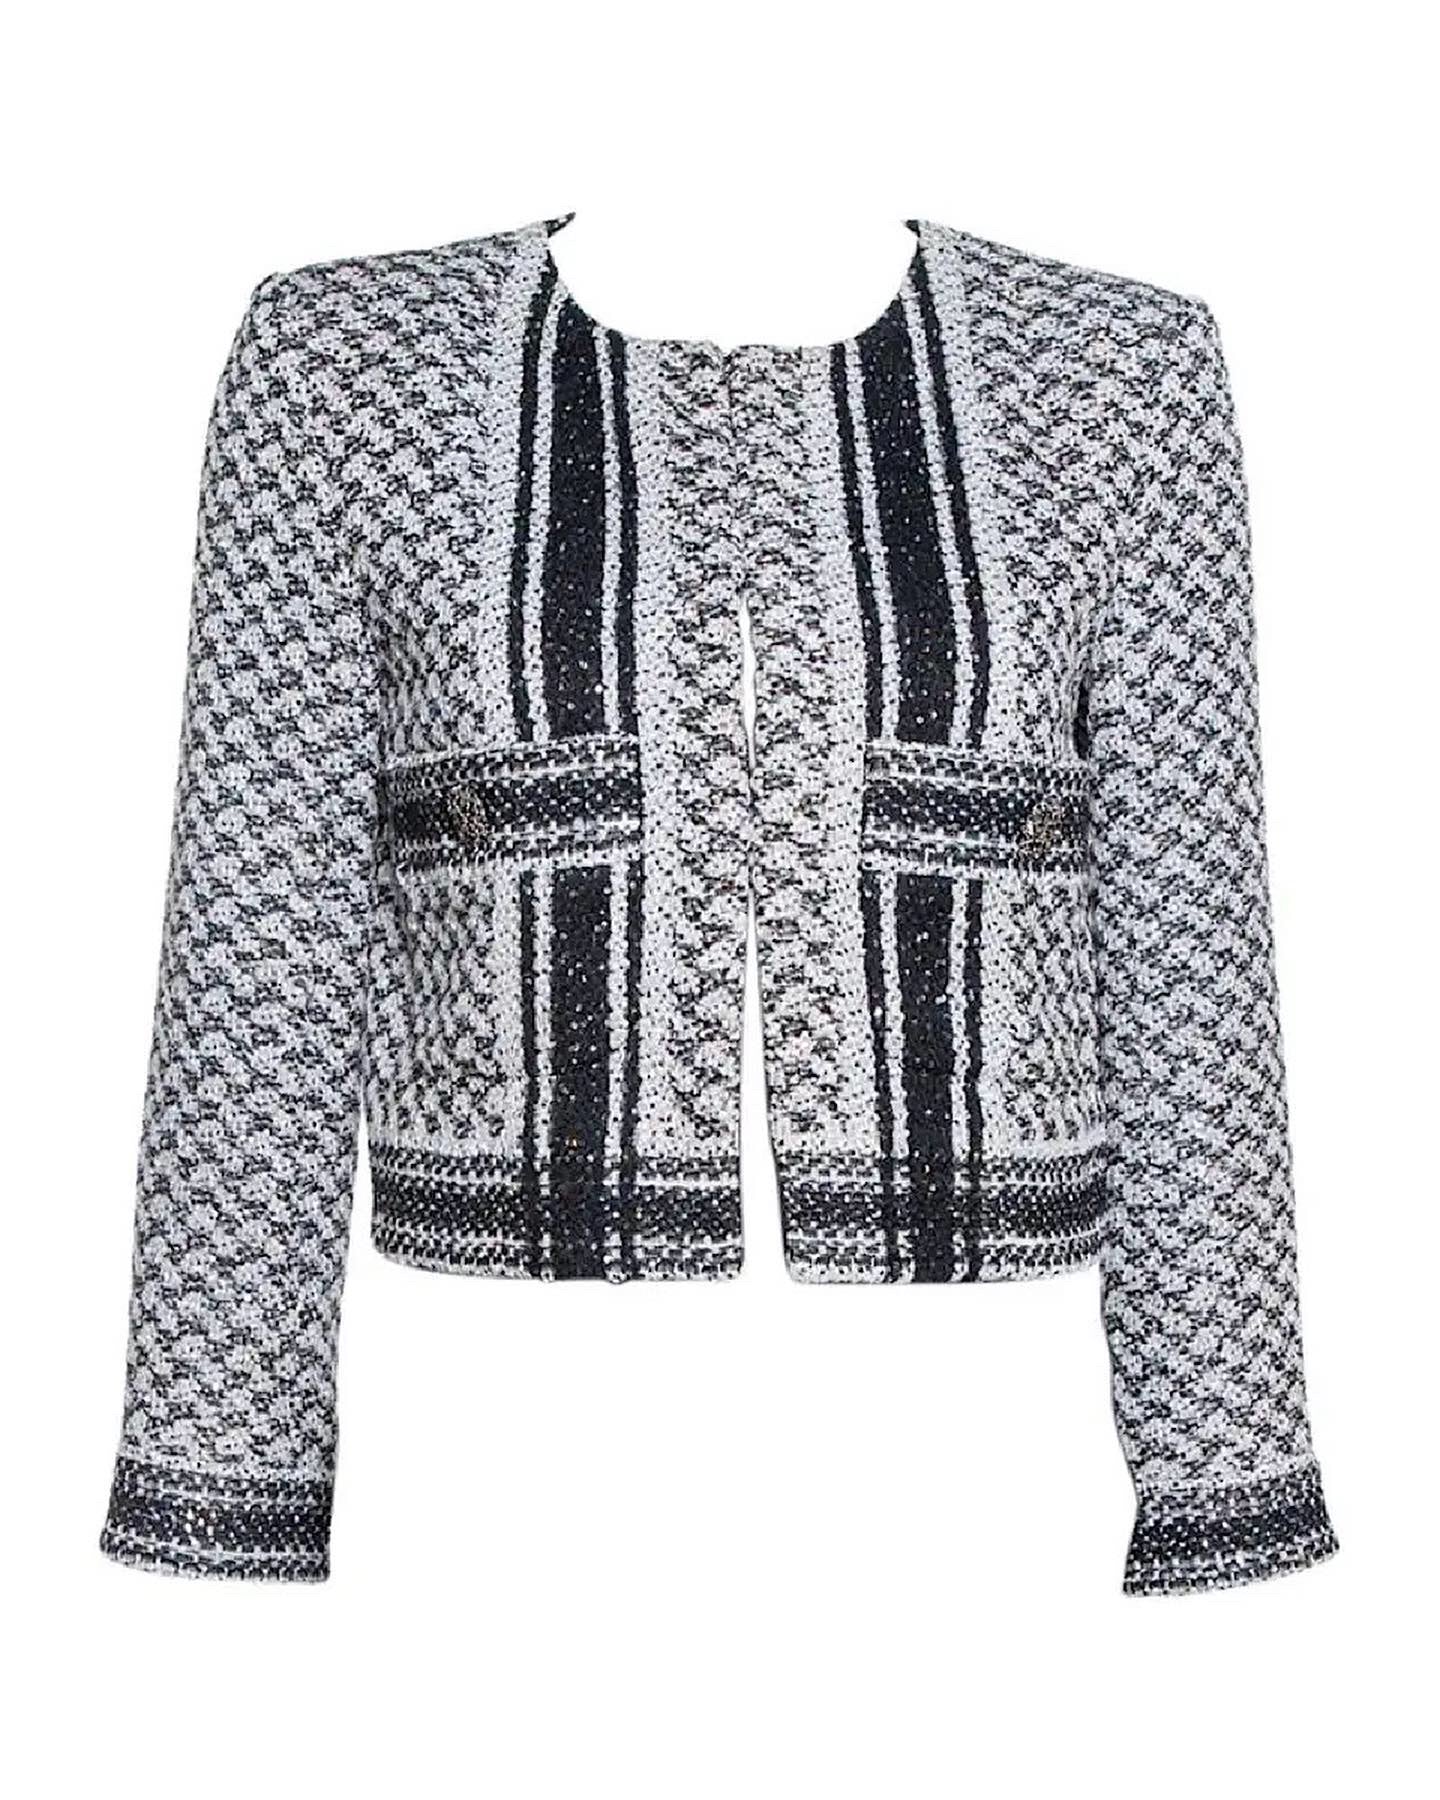 Very Rare Chanel 15C 2015 Cruise Paris-Dubai Tweed Glitter Jacket